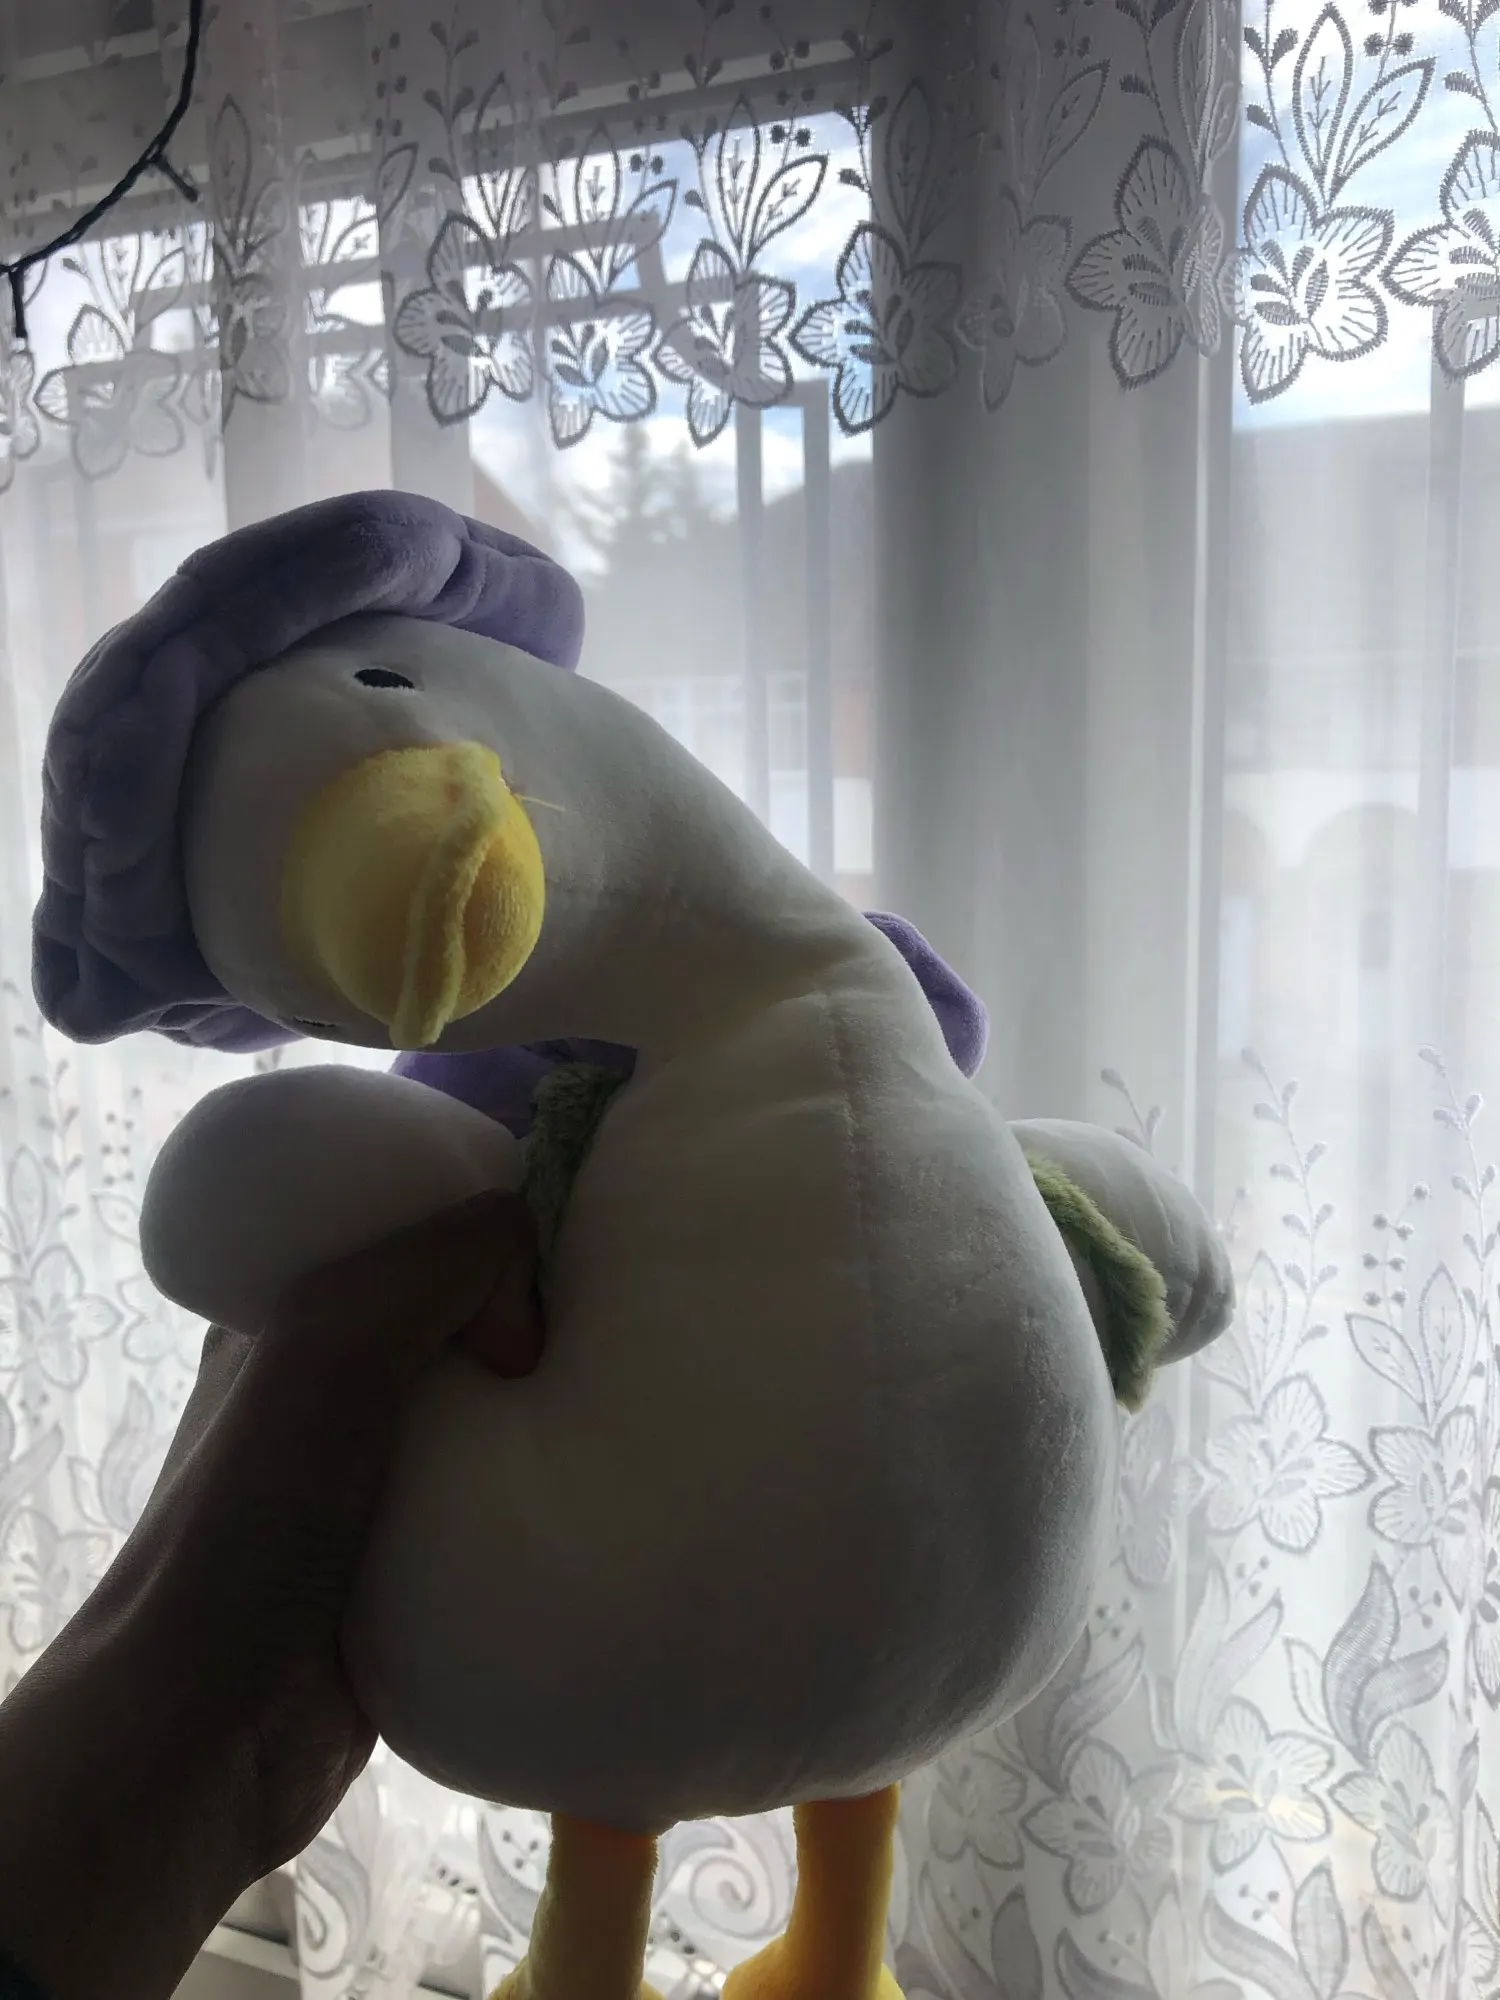 Kawaii Molly the Little Flower Duck photo review